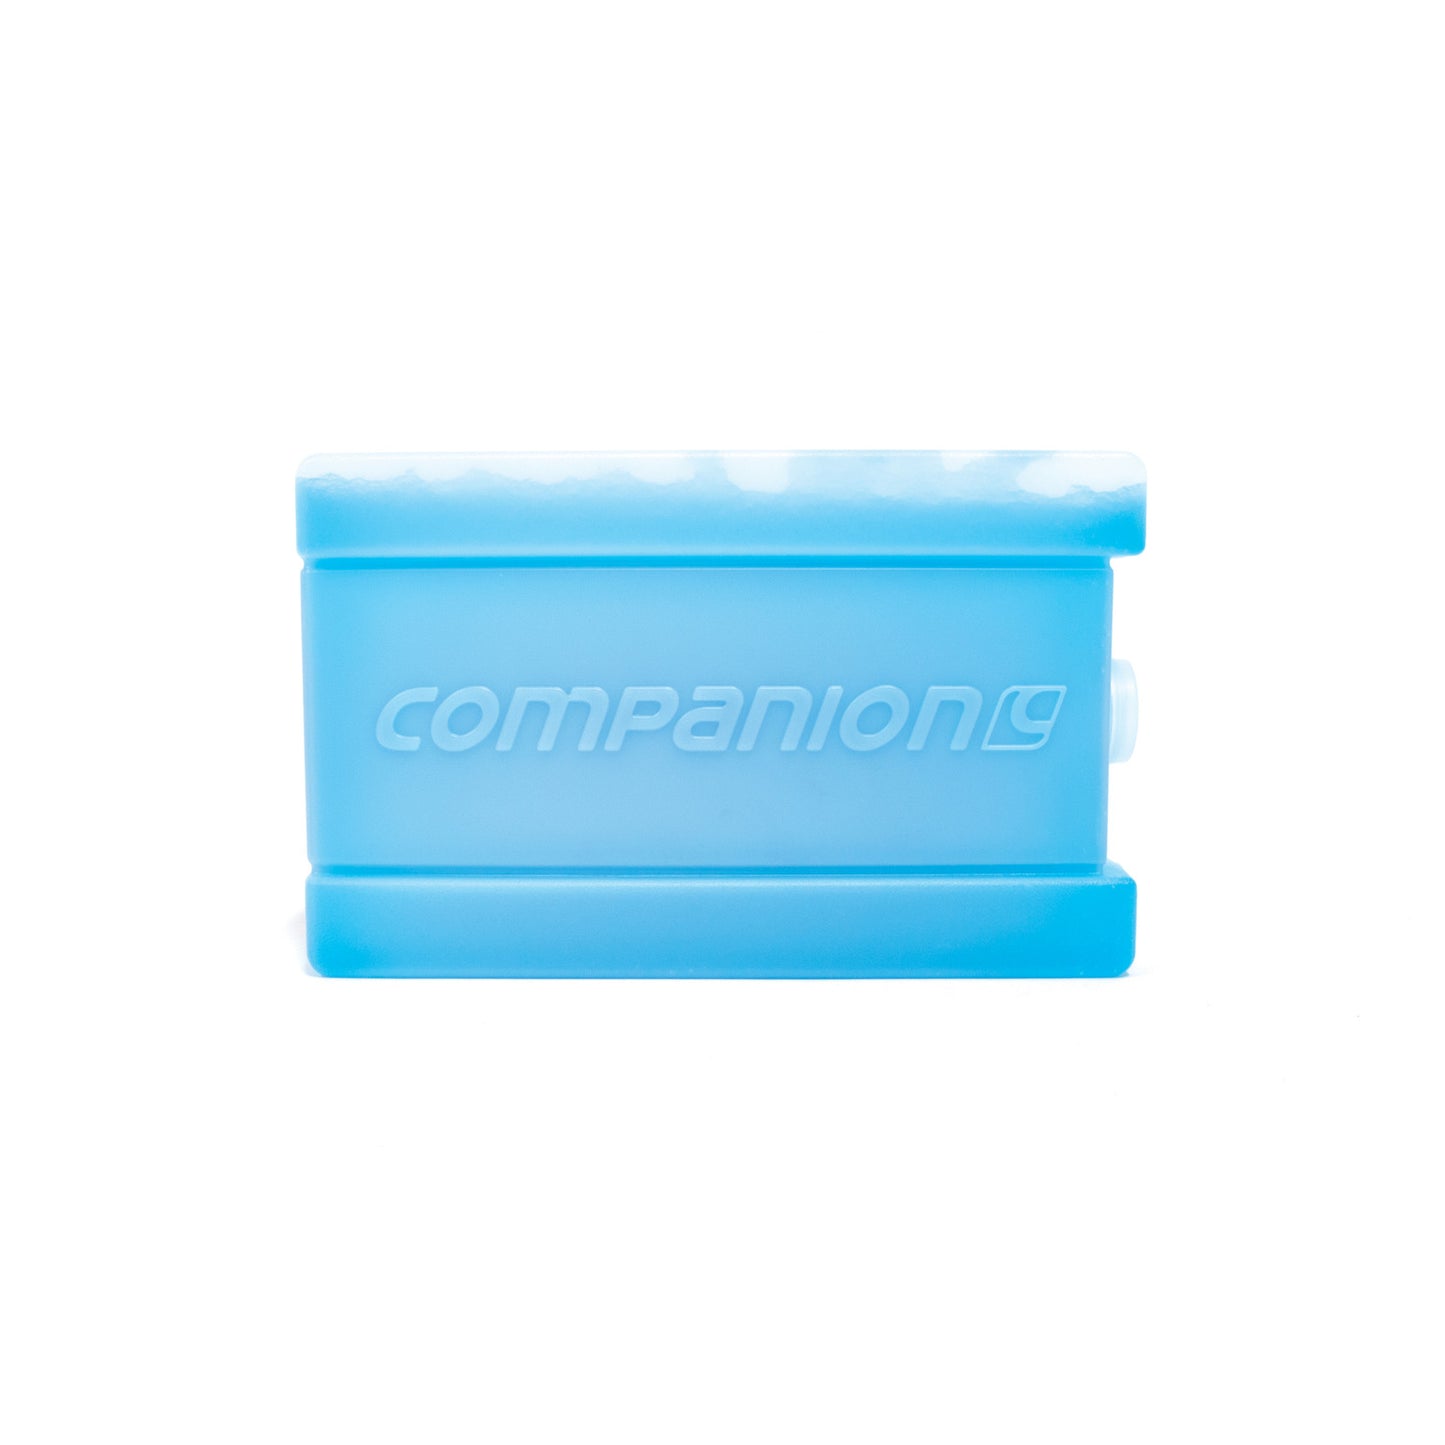 Companion Ice Brick